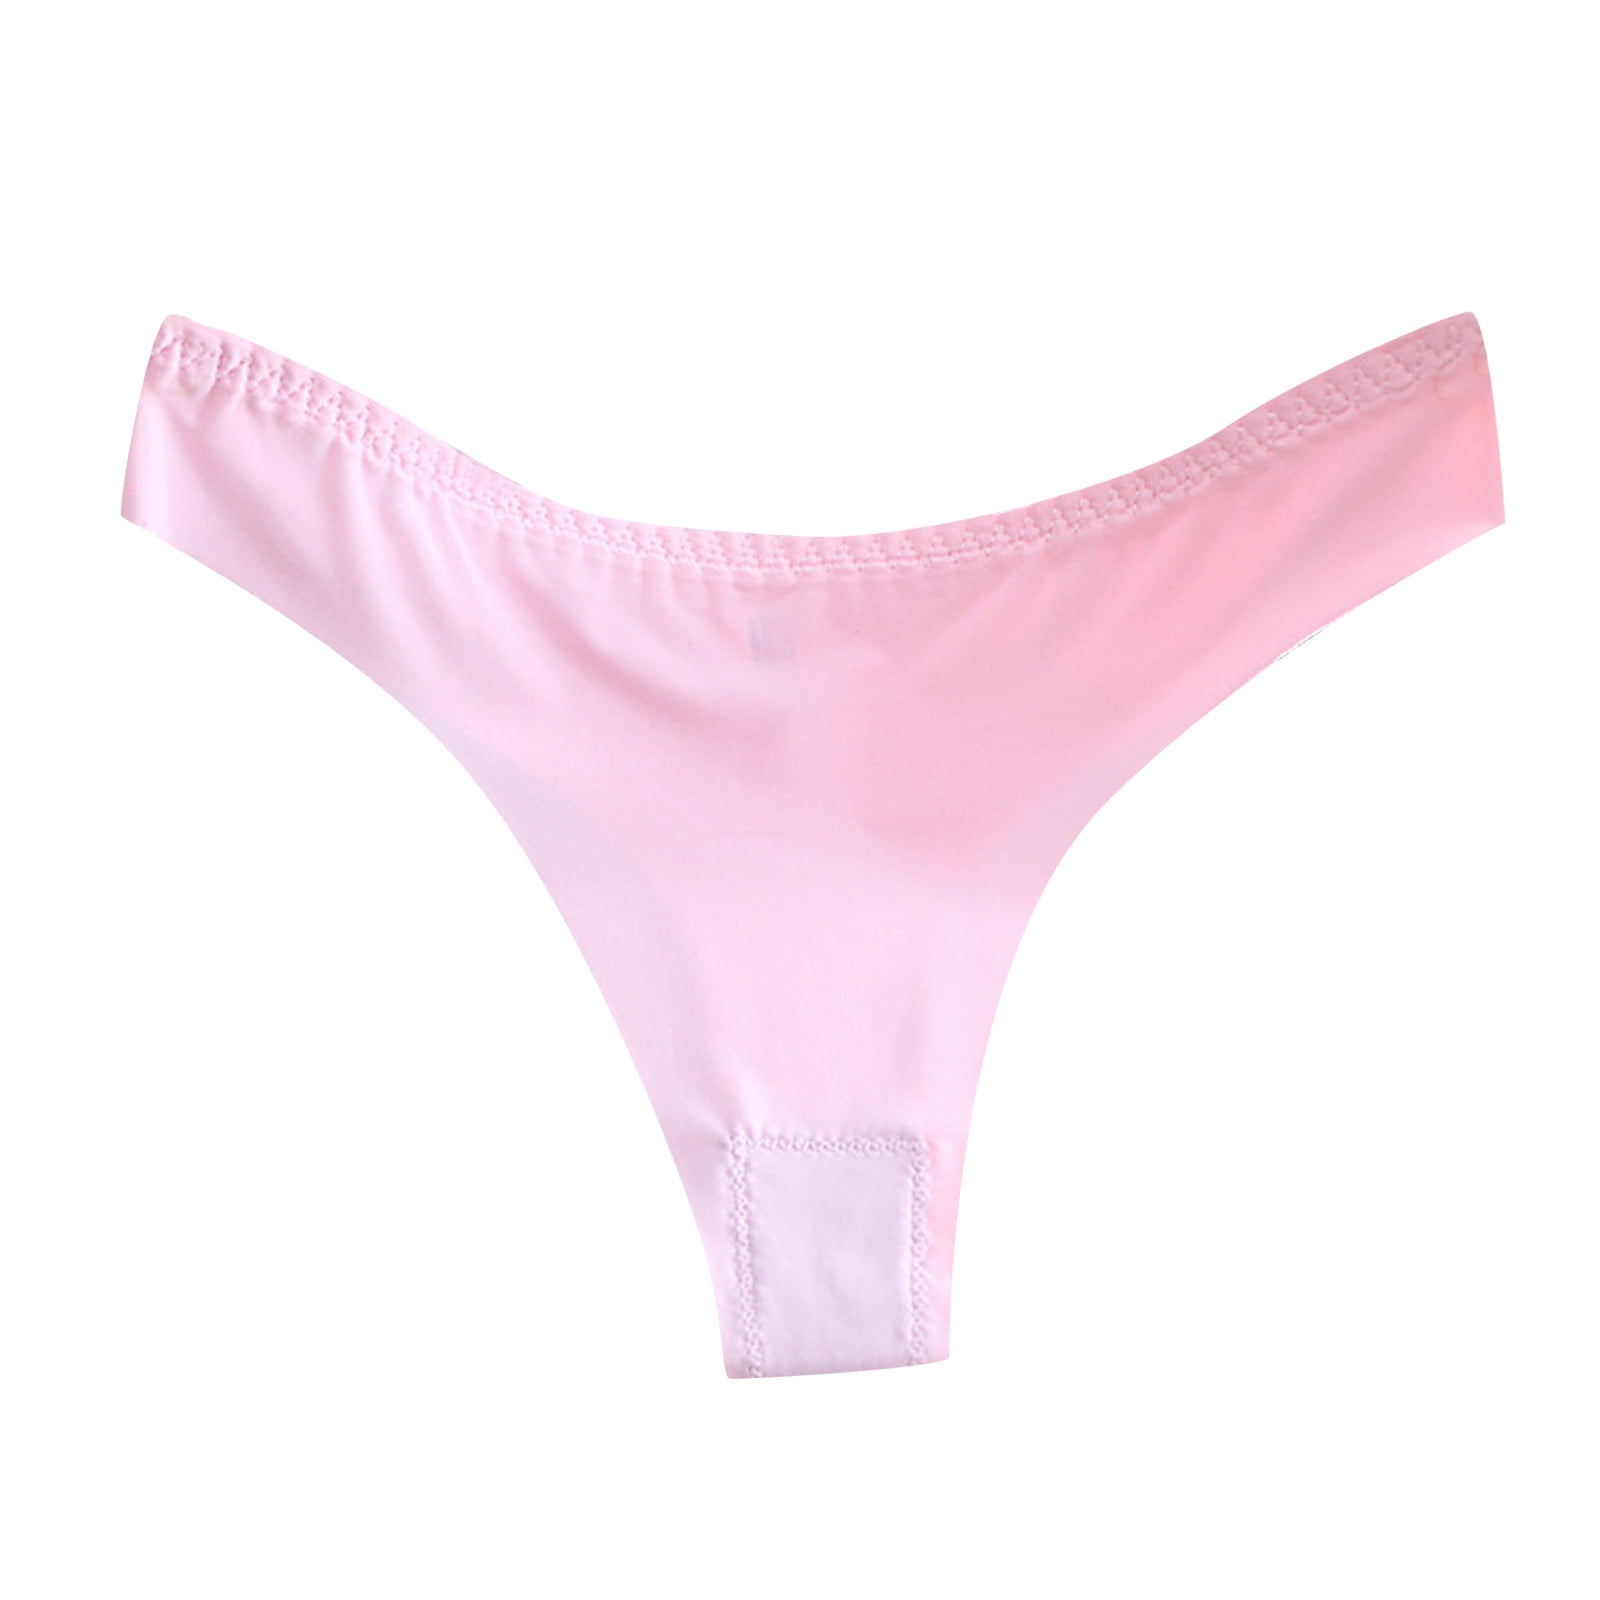 LBECLEY Dark Panties for Women Double Strap Thong Low Waist Double Cotton T Shape  Panties Panties Bikini Cute Women Underwear Set Hot Pink Xxl 